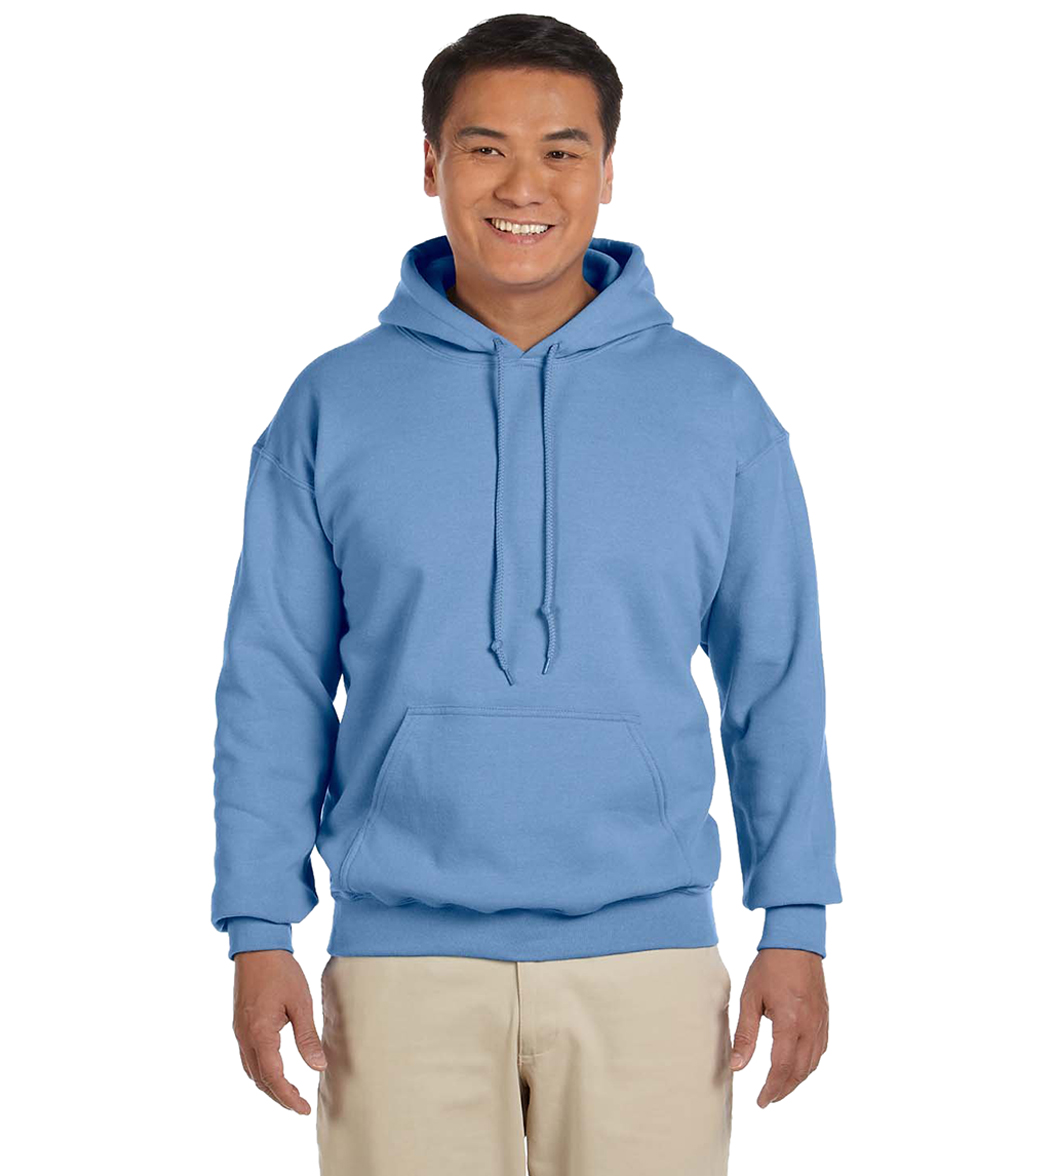 Men's Heavy Blend Hooded Sweatshirt - Carolina Blue Small Cotton/Polyester - Swimoutlet.com